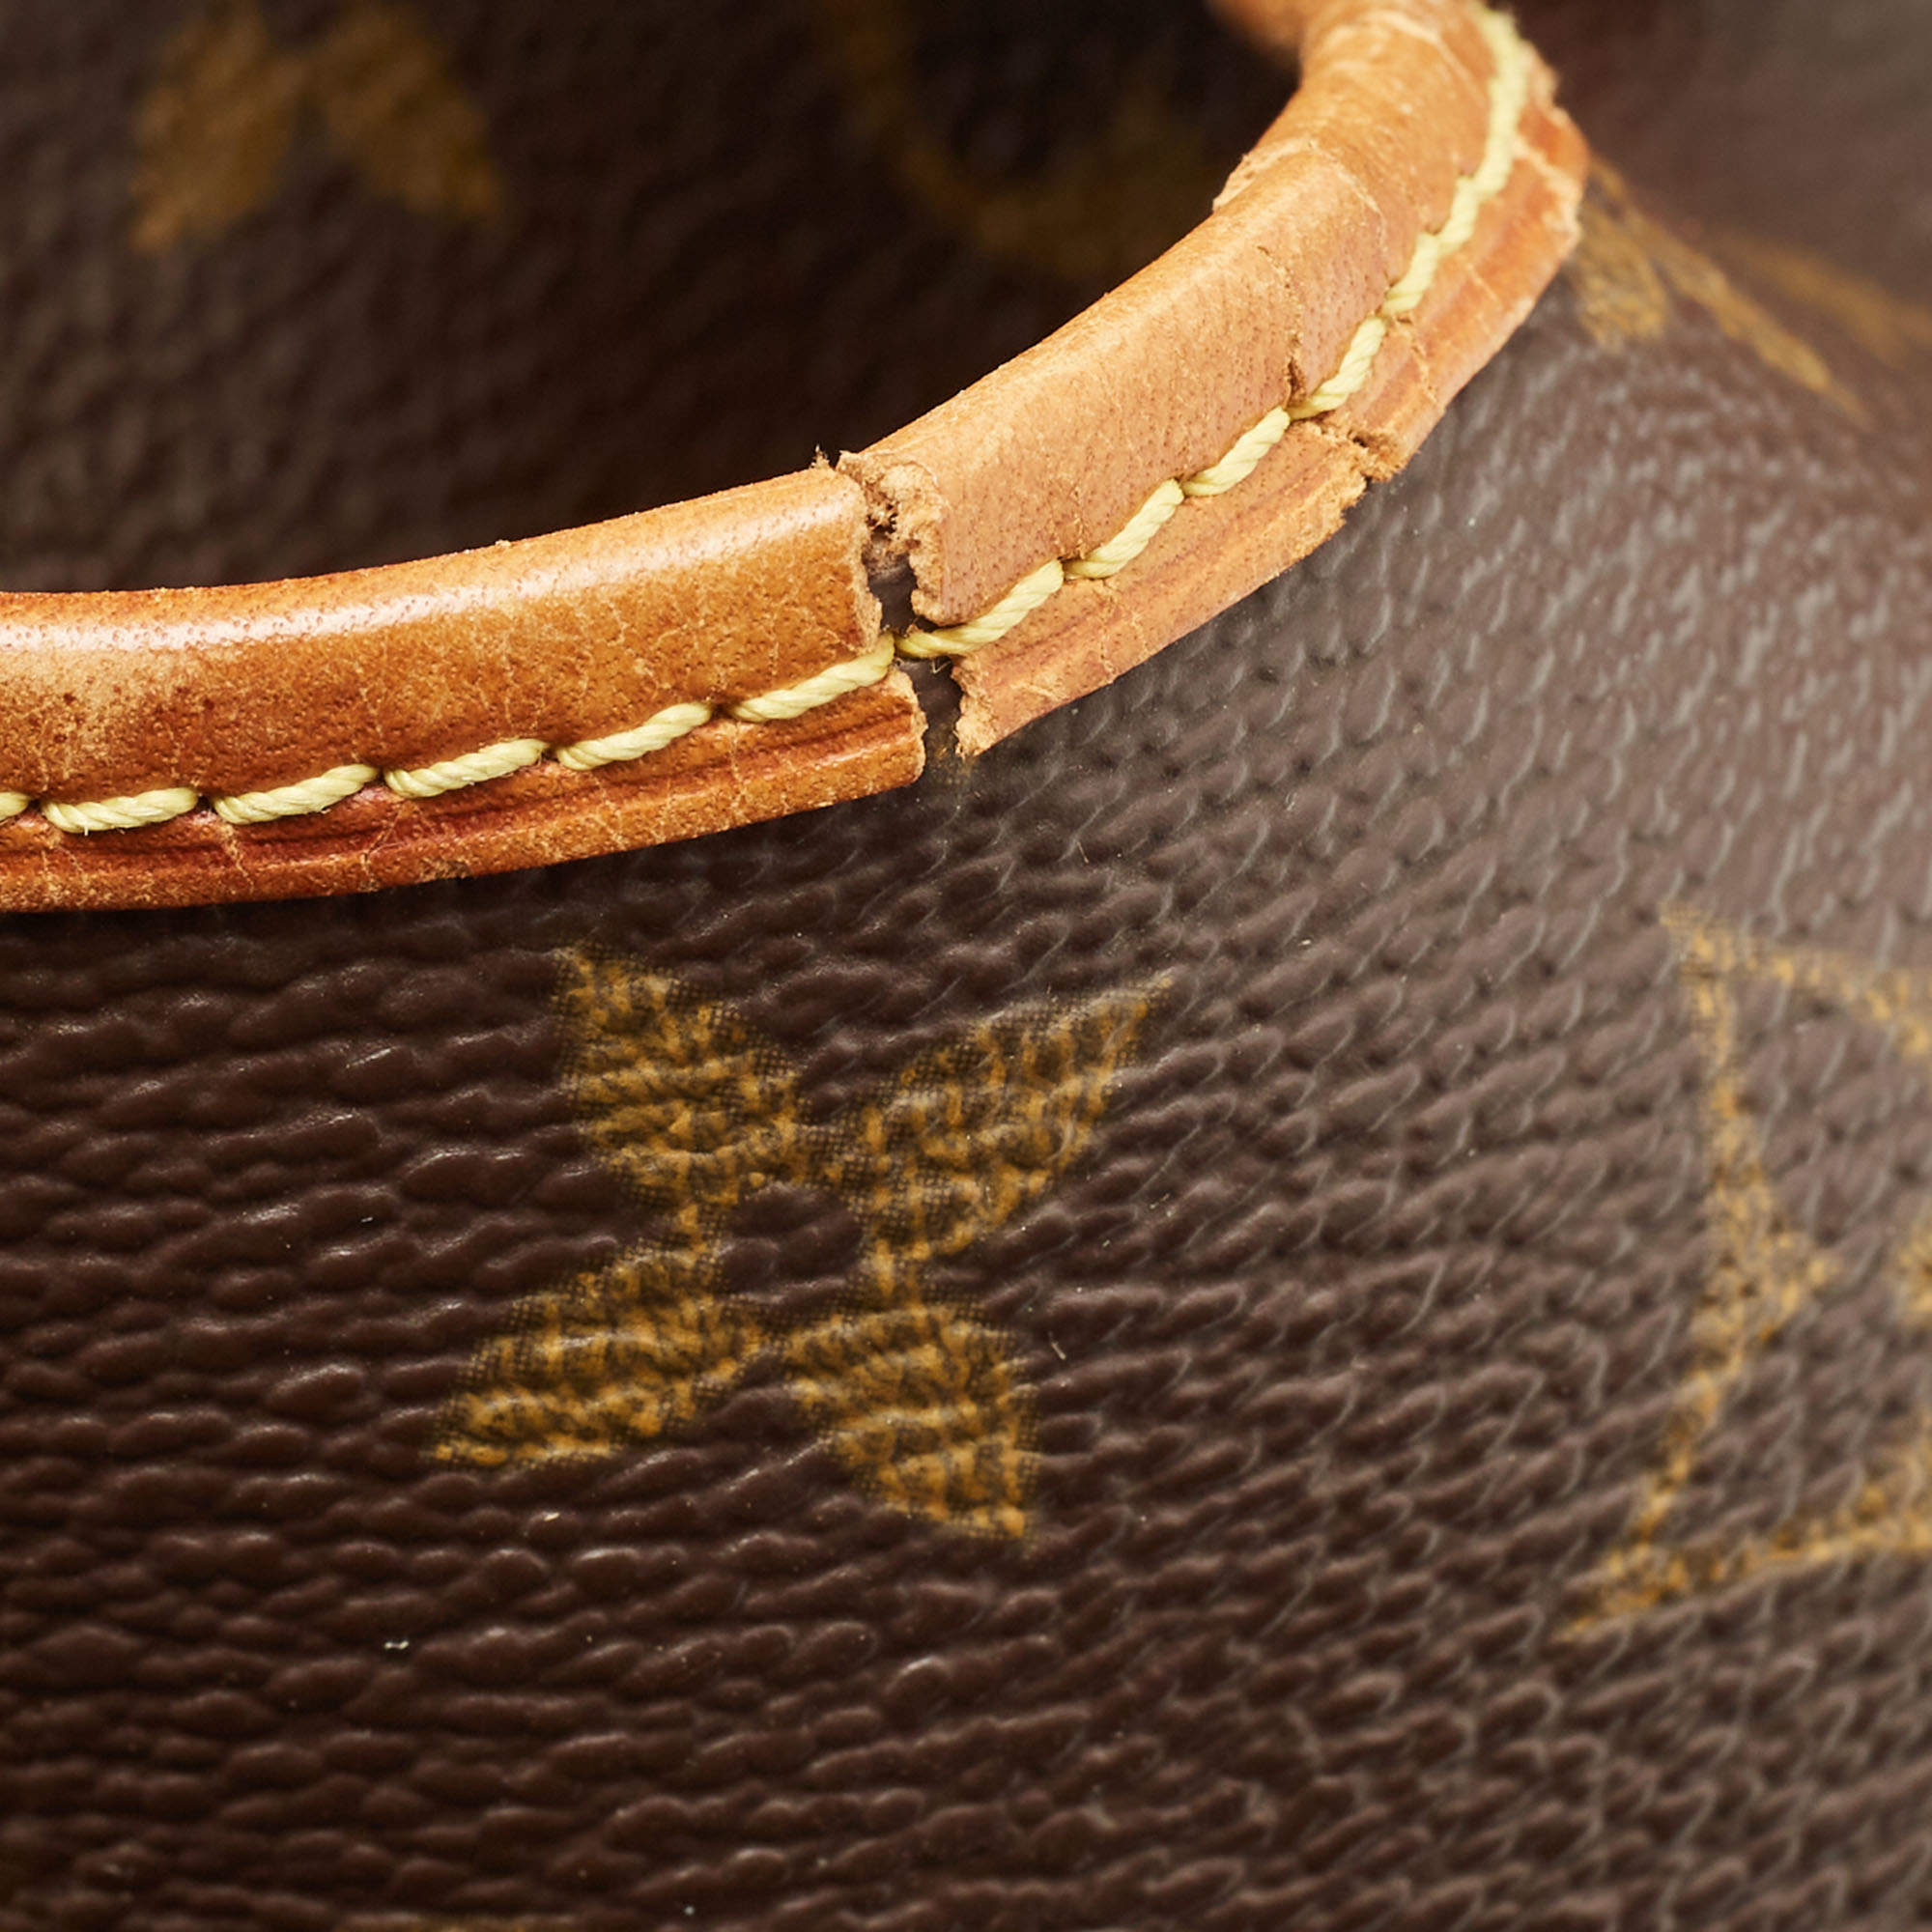 Handbag LOUIS VUITTON model Deauville brown coated canva…